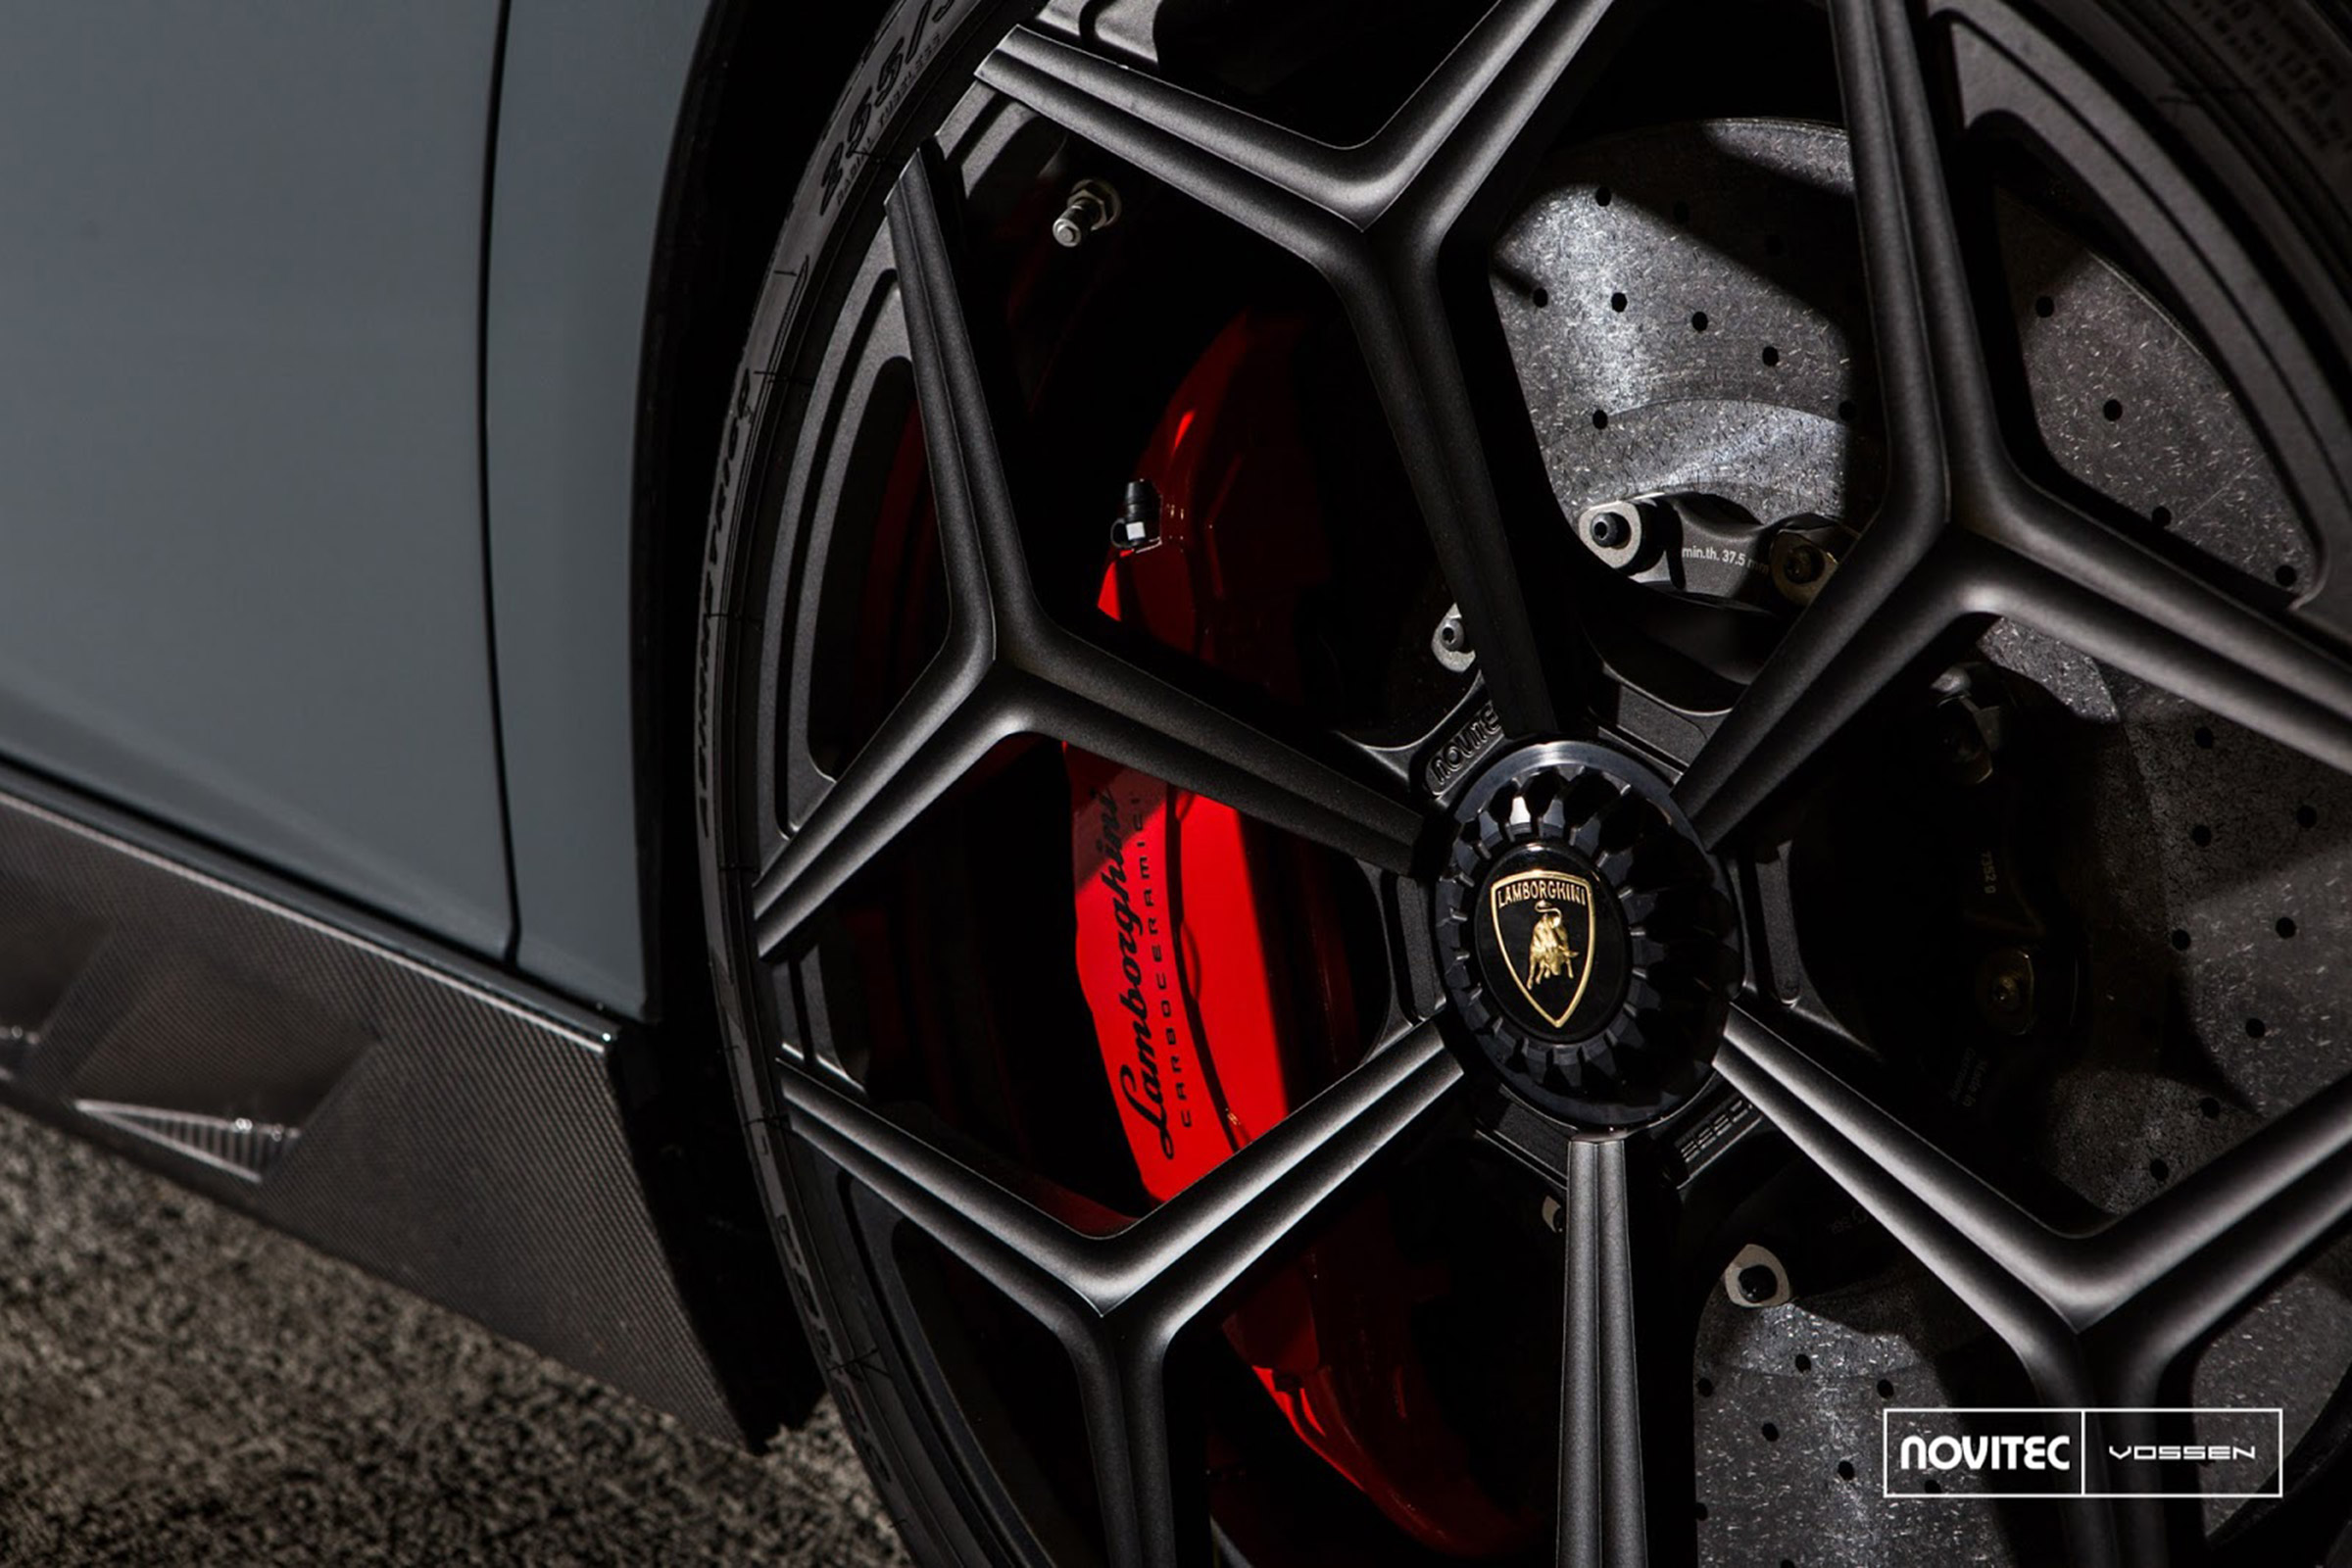 Novitec Lamborghini Aventador SV offers a supercharged 970bhp | evo